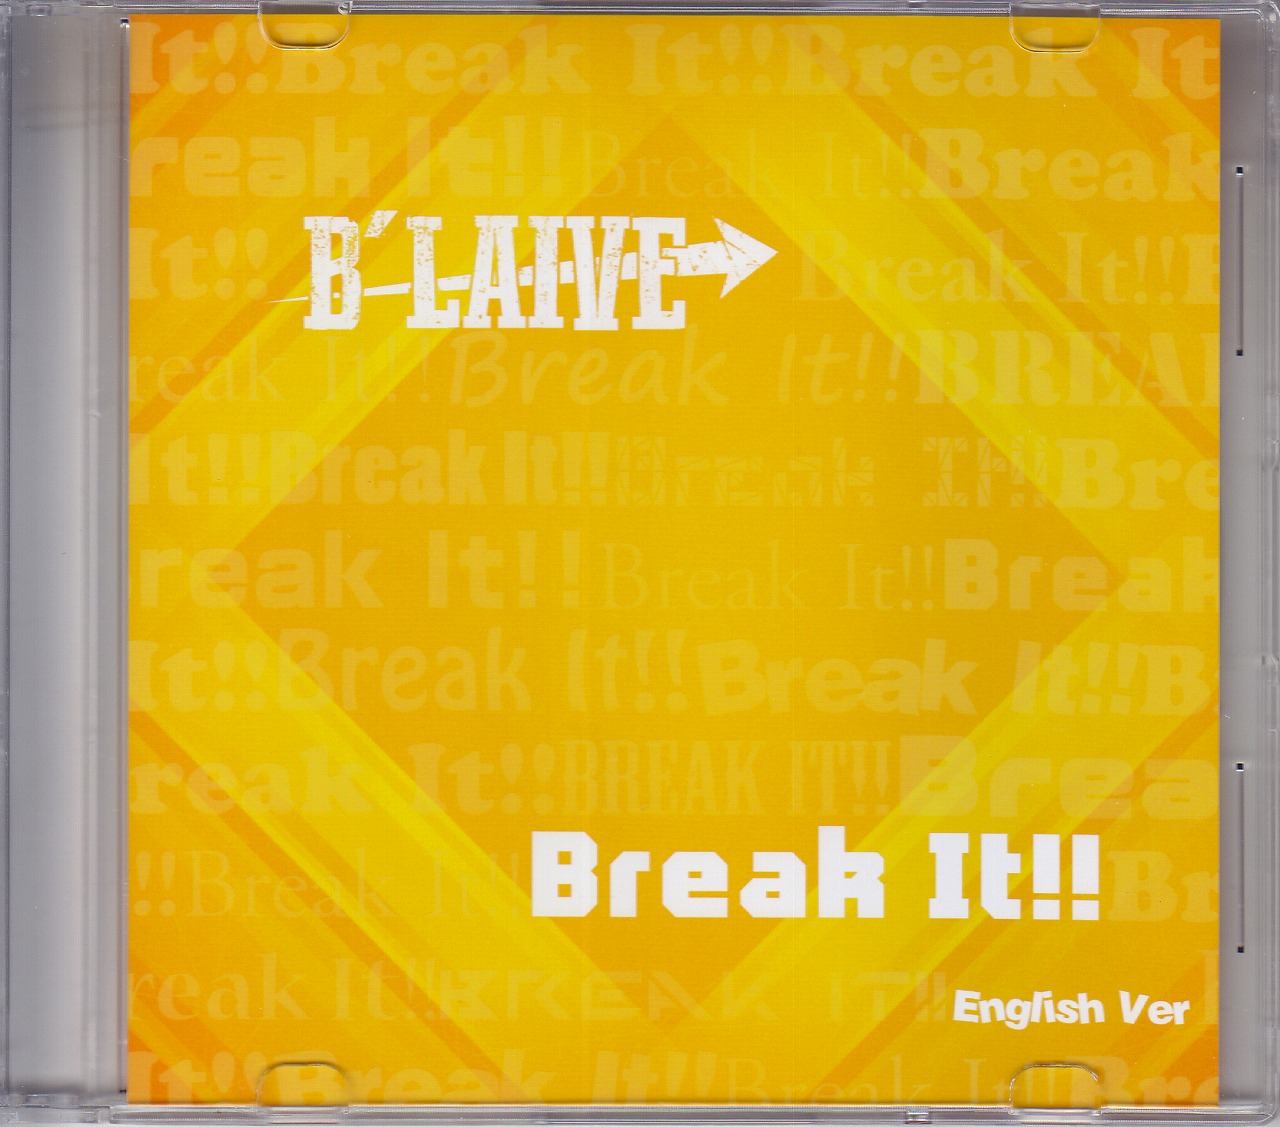 B'LAIVE ( ブレイブ )  の CD Break It!! English Ver